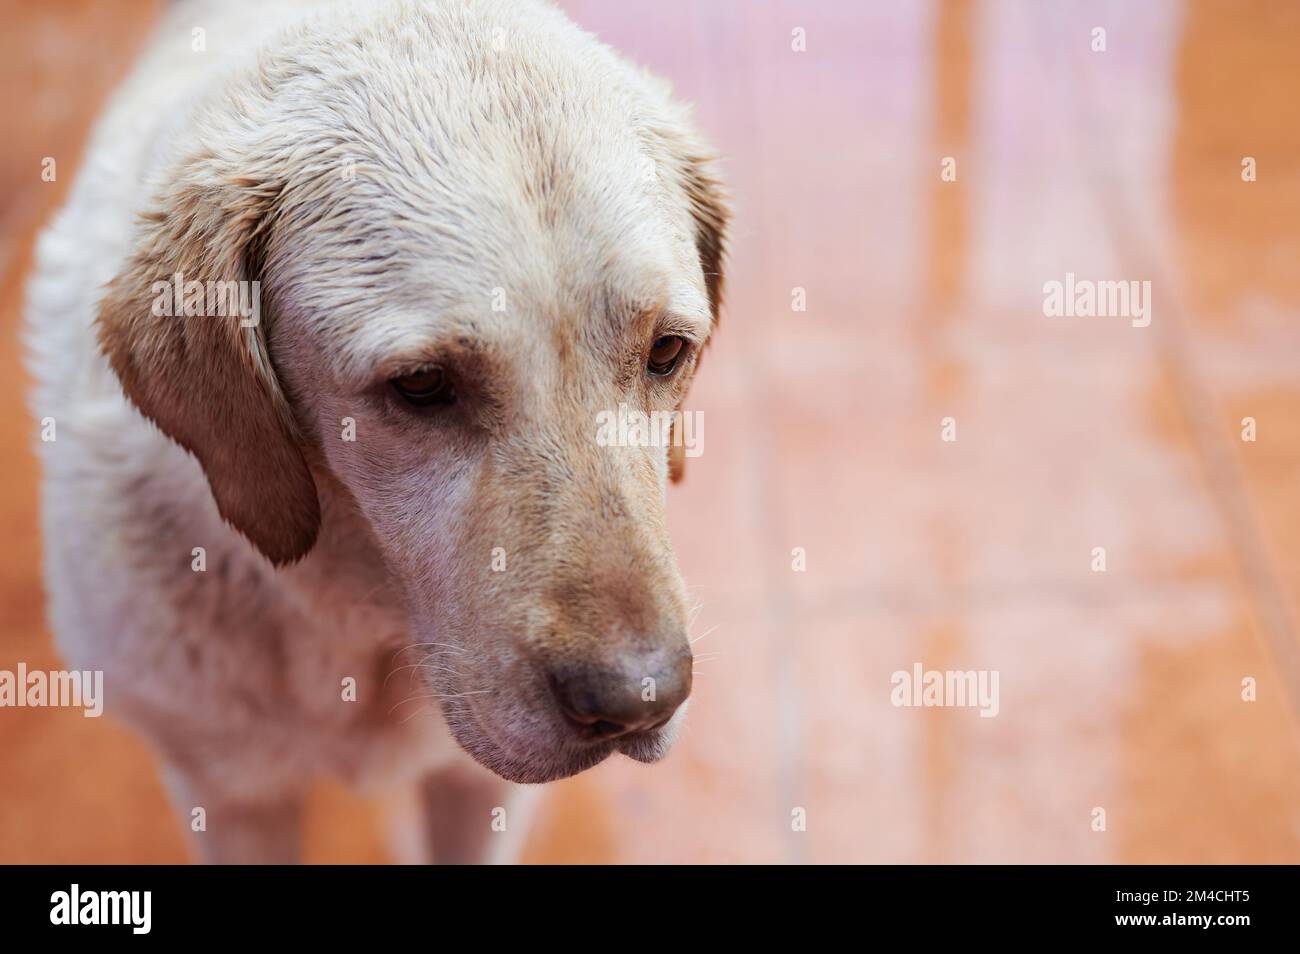 Sad labrador dog portrait looking down close up view Stock Photo